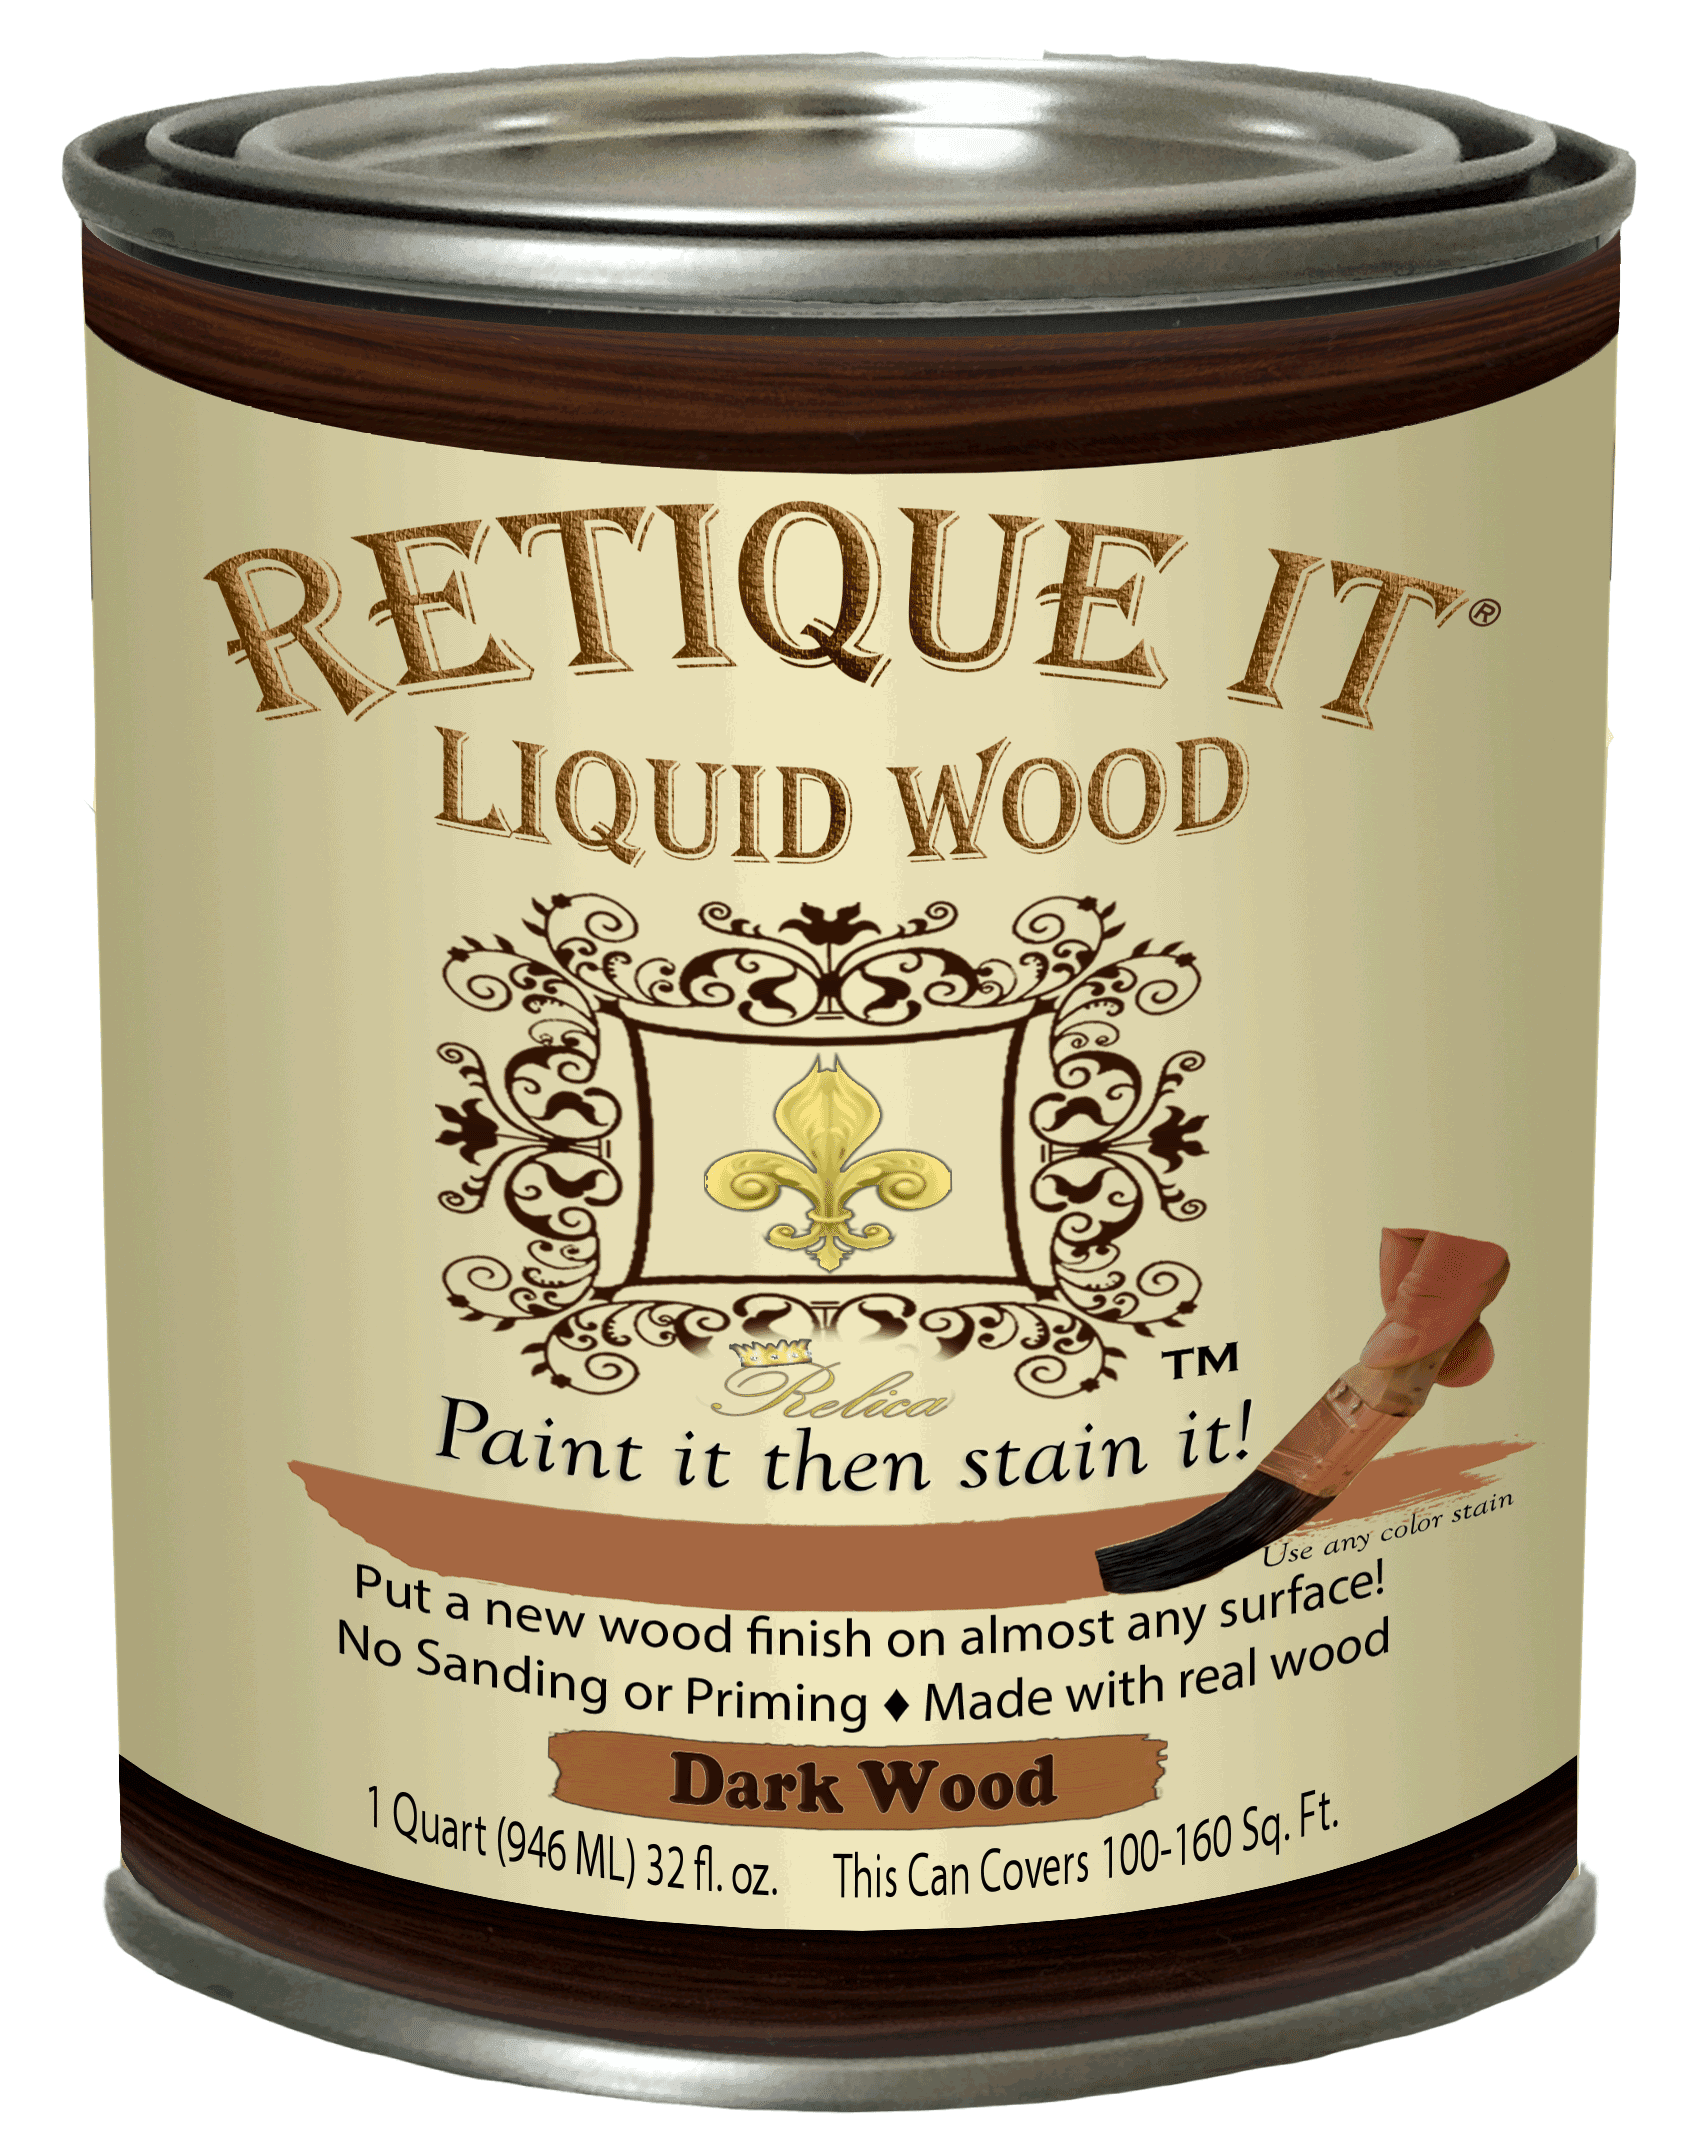 Wood'n Stain - Black Walnut | Retique It Shop Pint